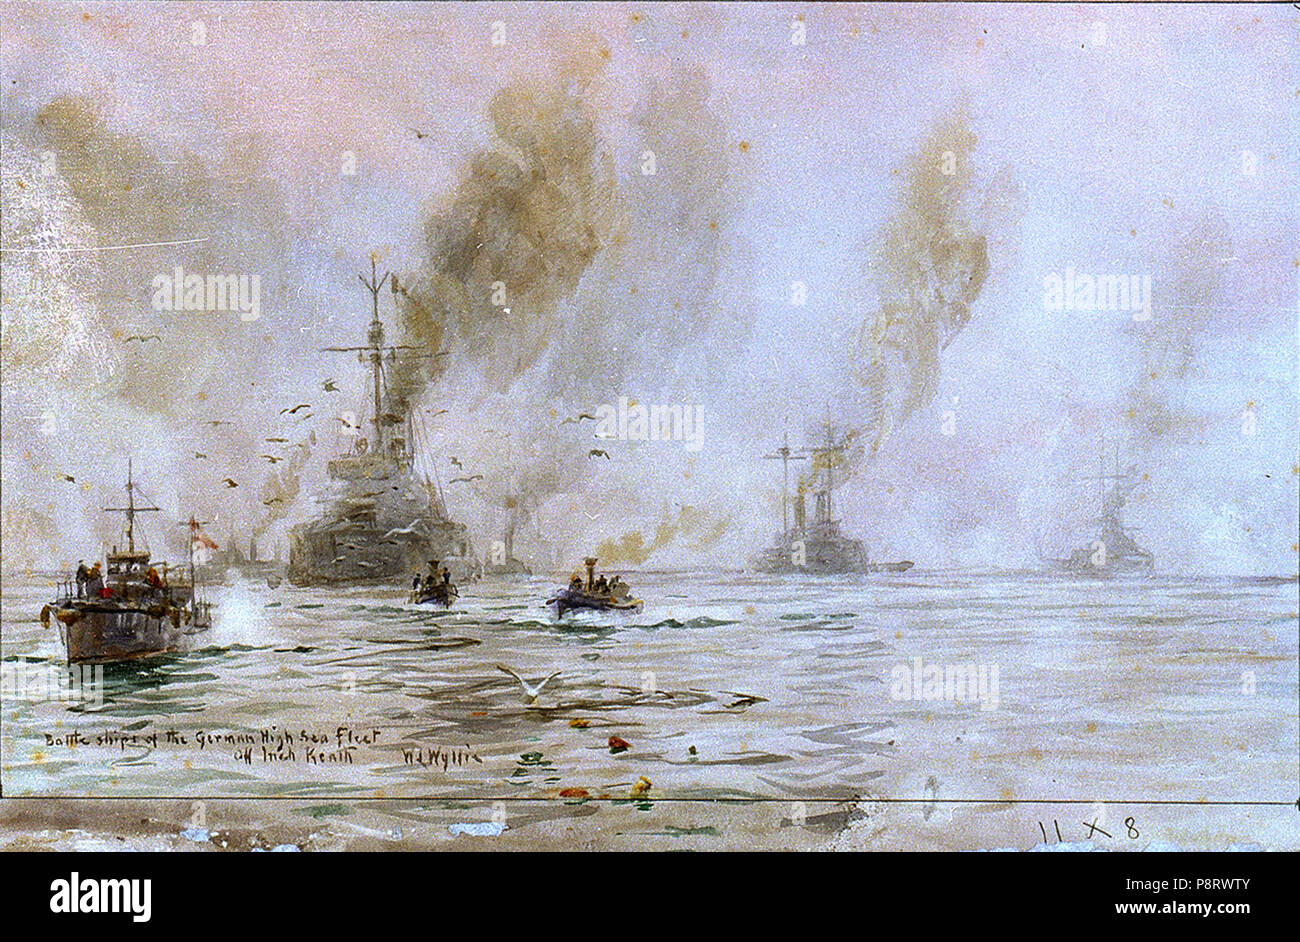 .   1 'Battle ships of German High Seas Fleet off Inch Keith' RMG PW1758 Stock Photo